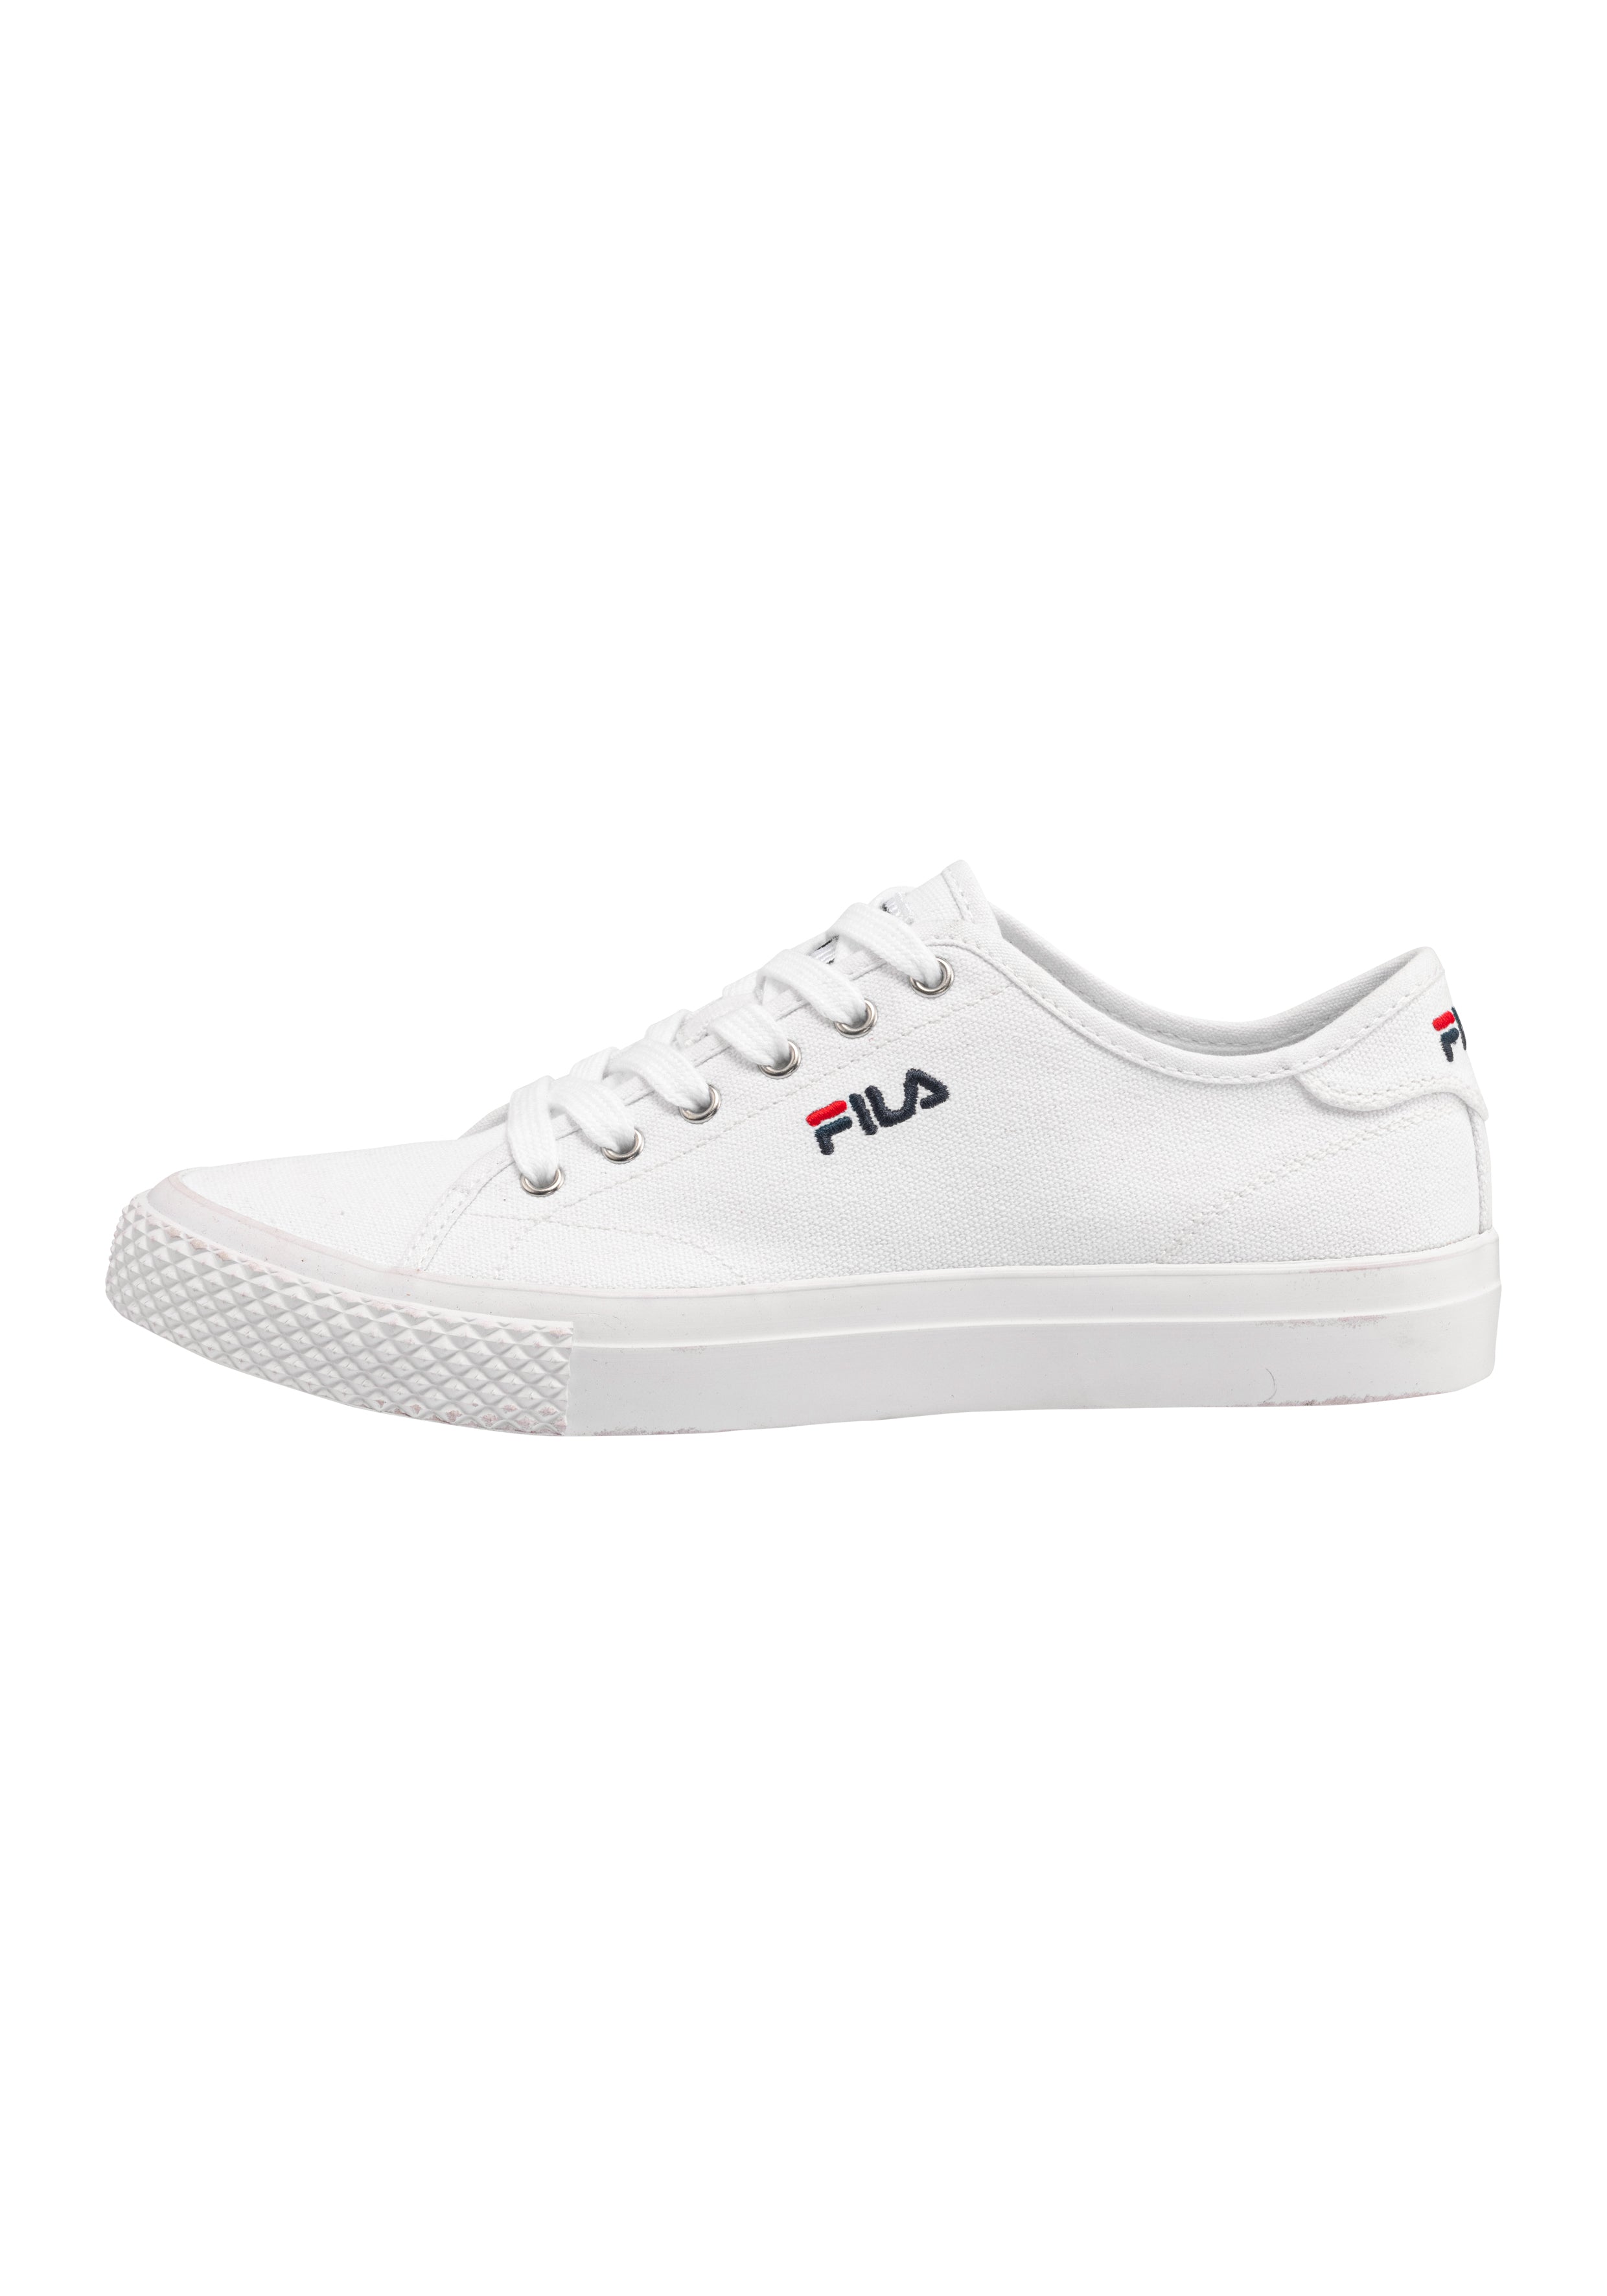 Pointer Classic Herren White Sneakers Fila   